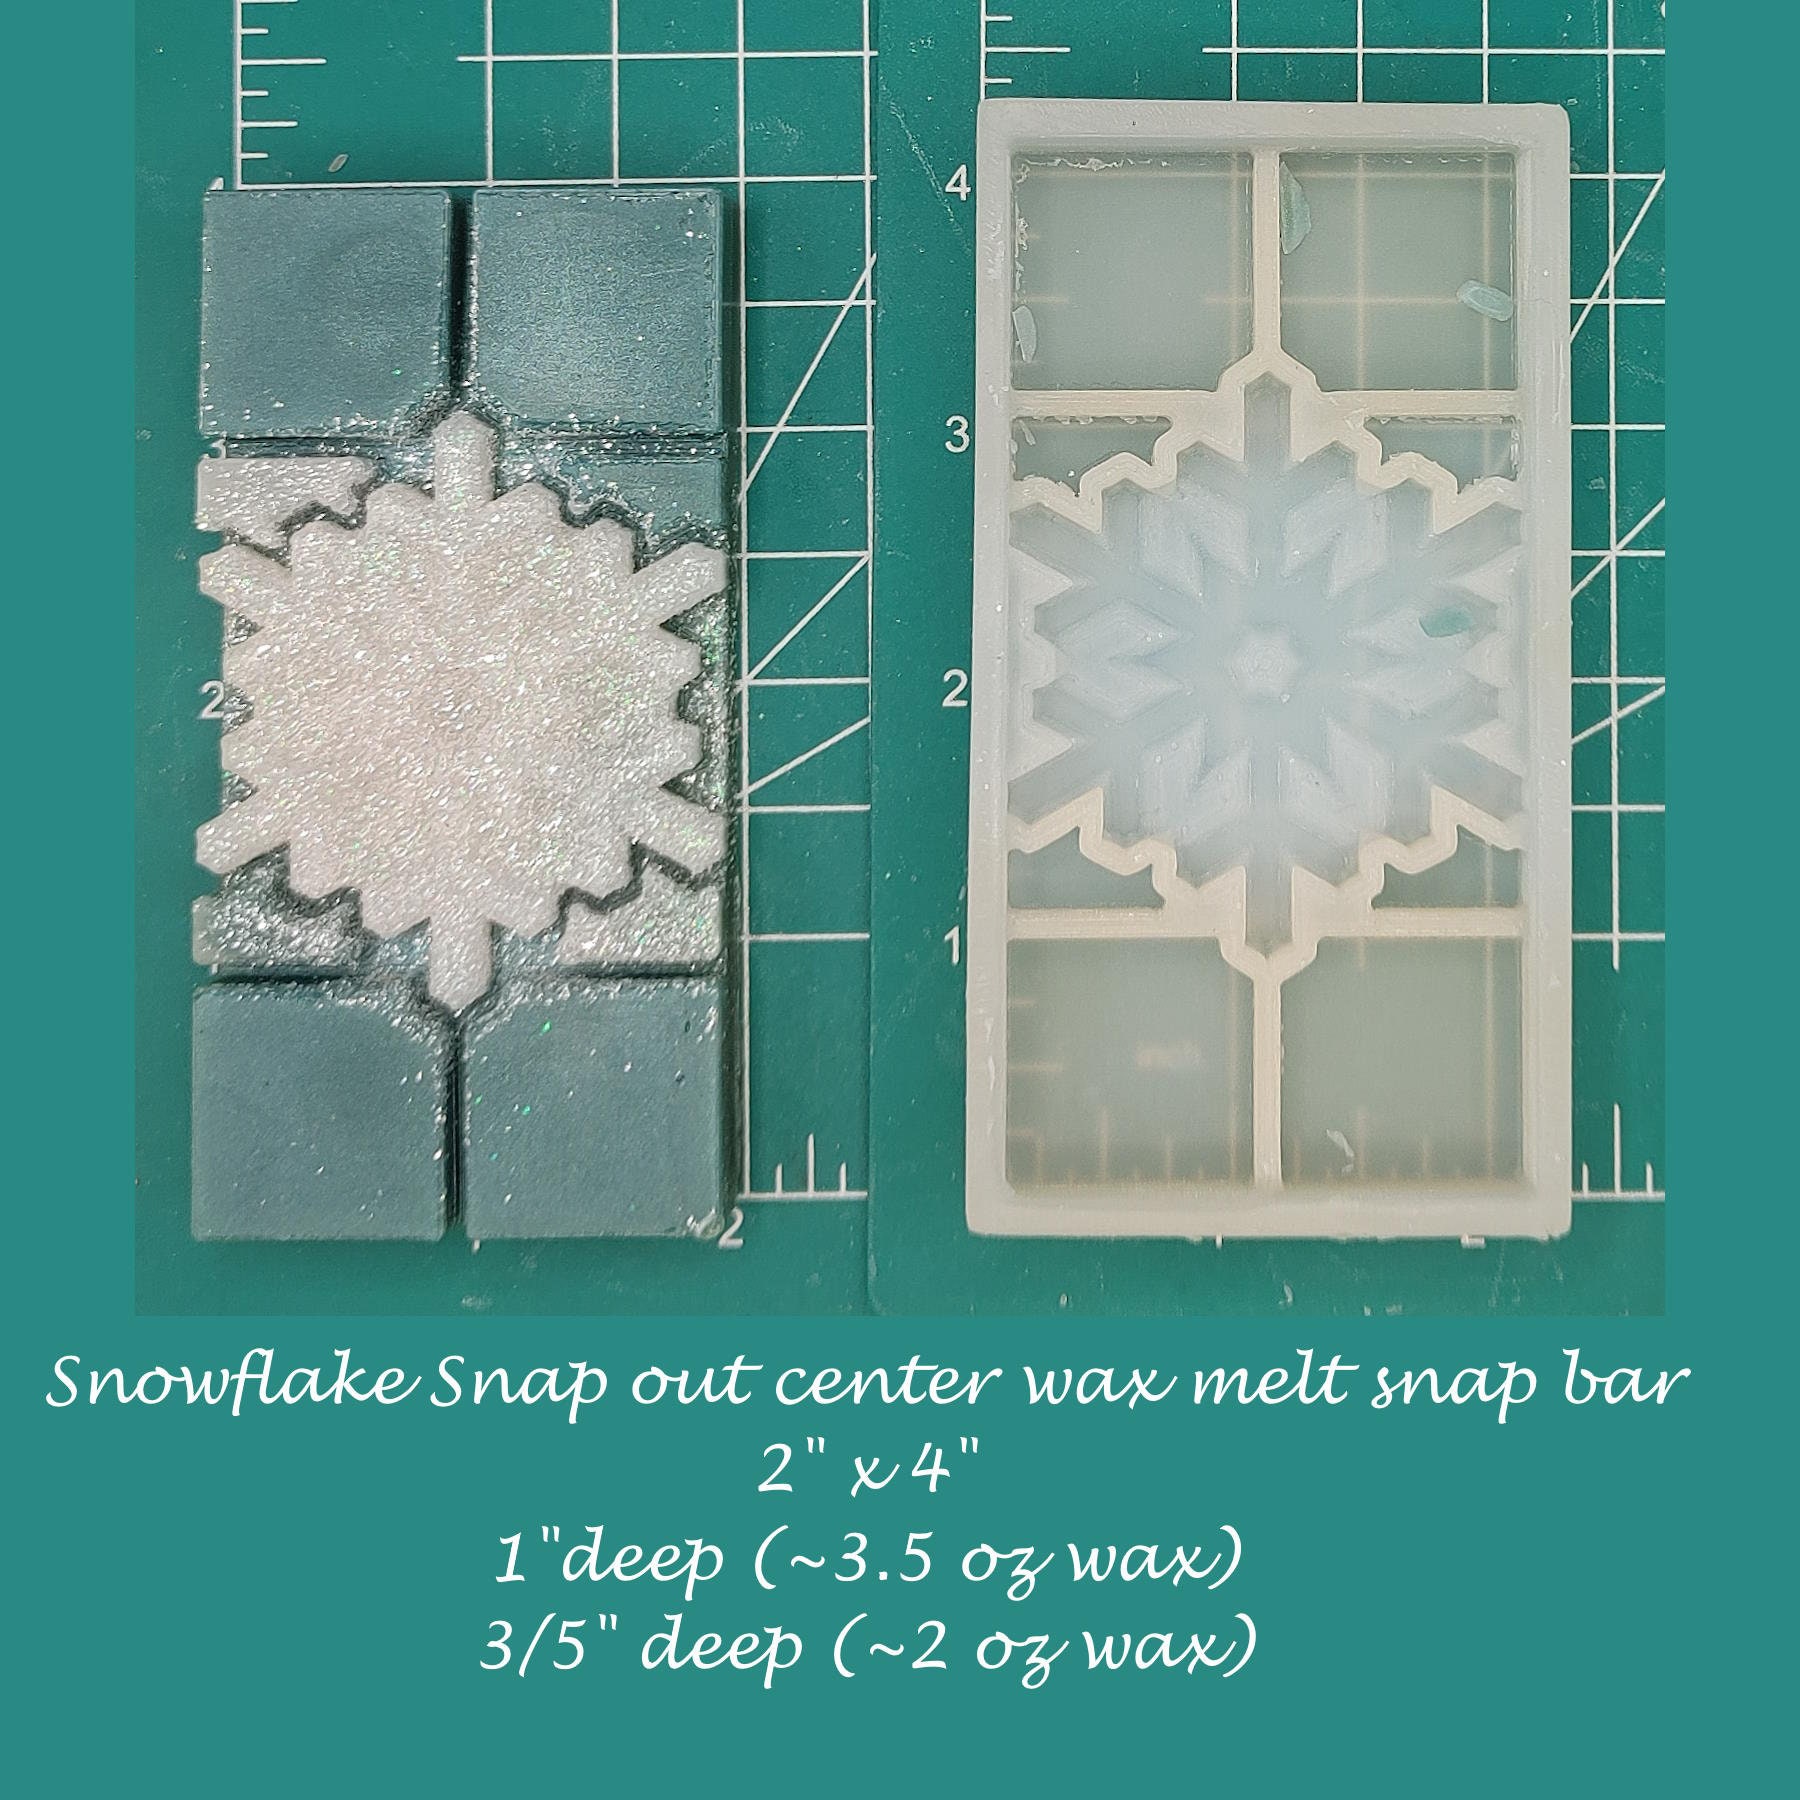 Heart Snap Out Center Wax Melt Snap Bar Silicone Mold